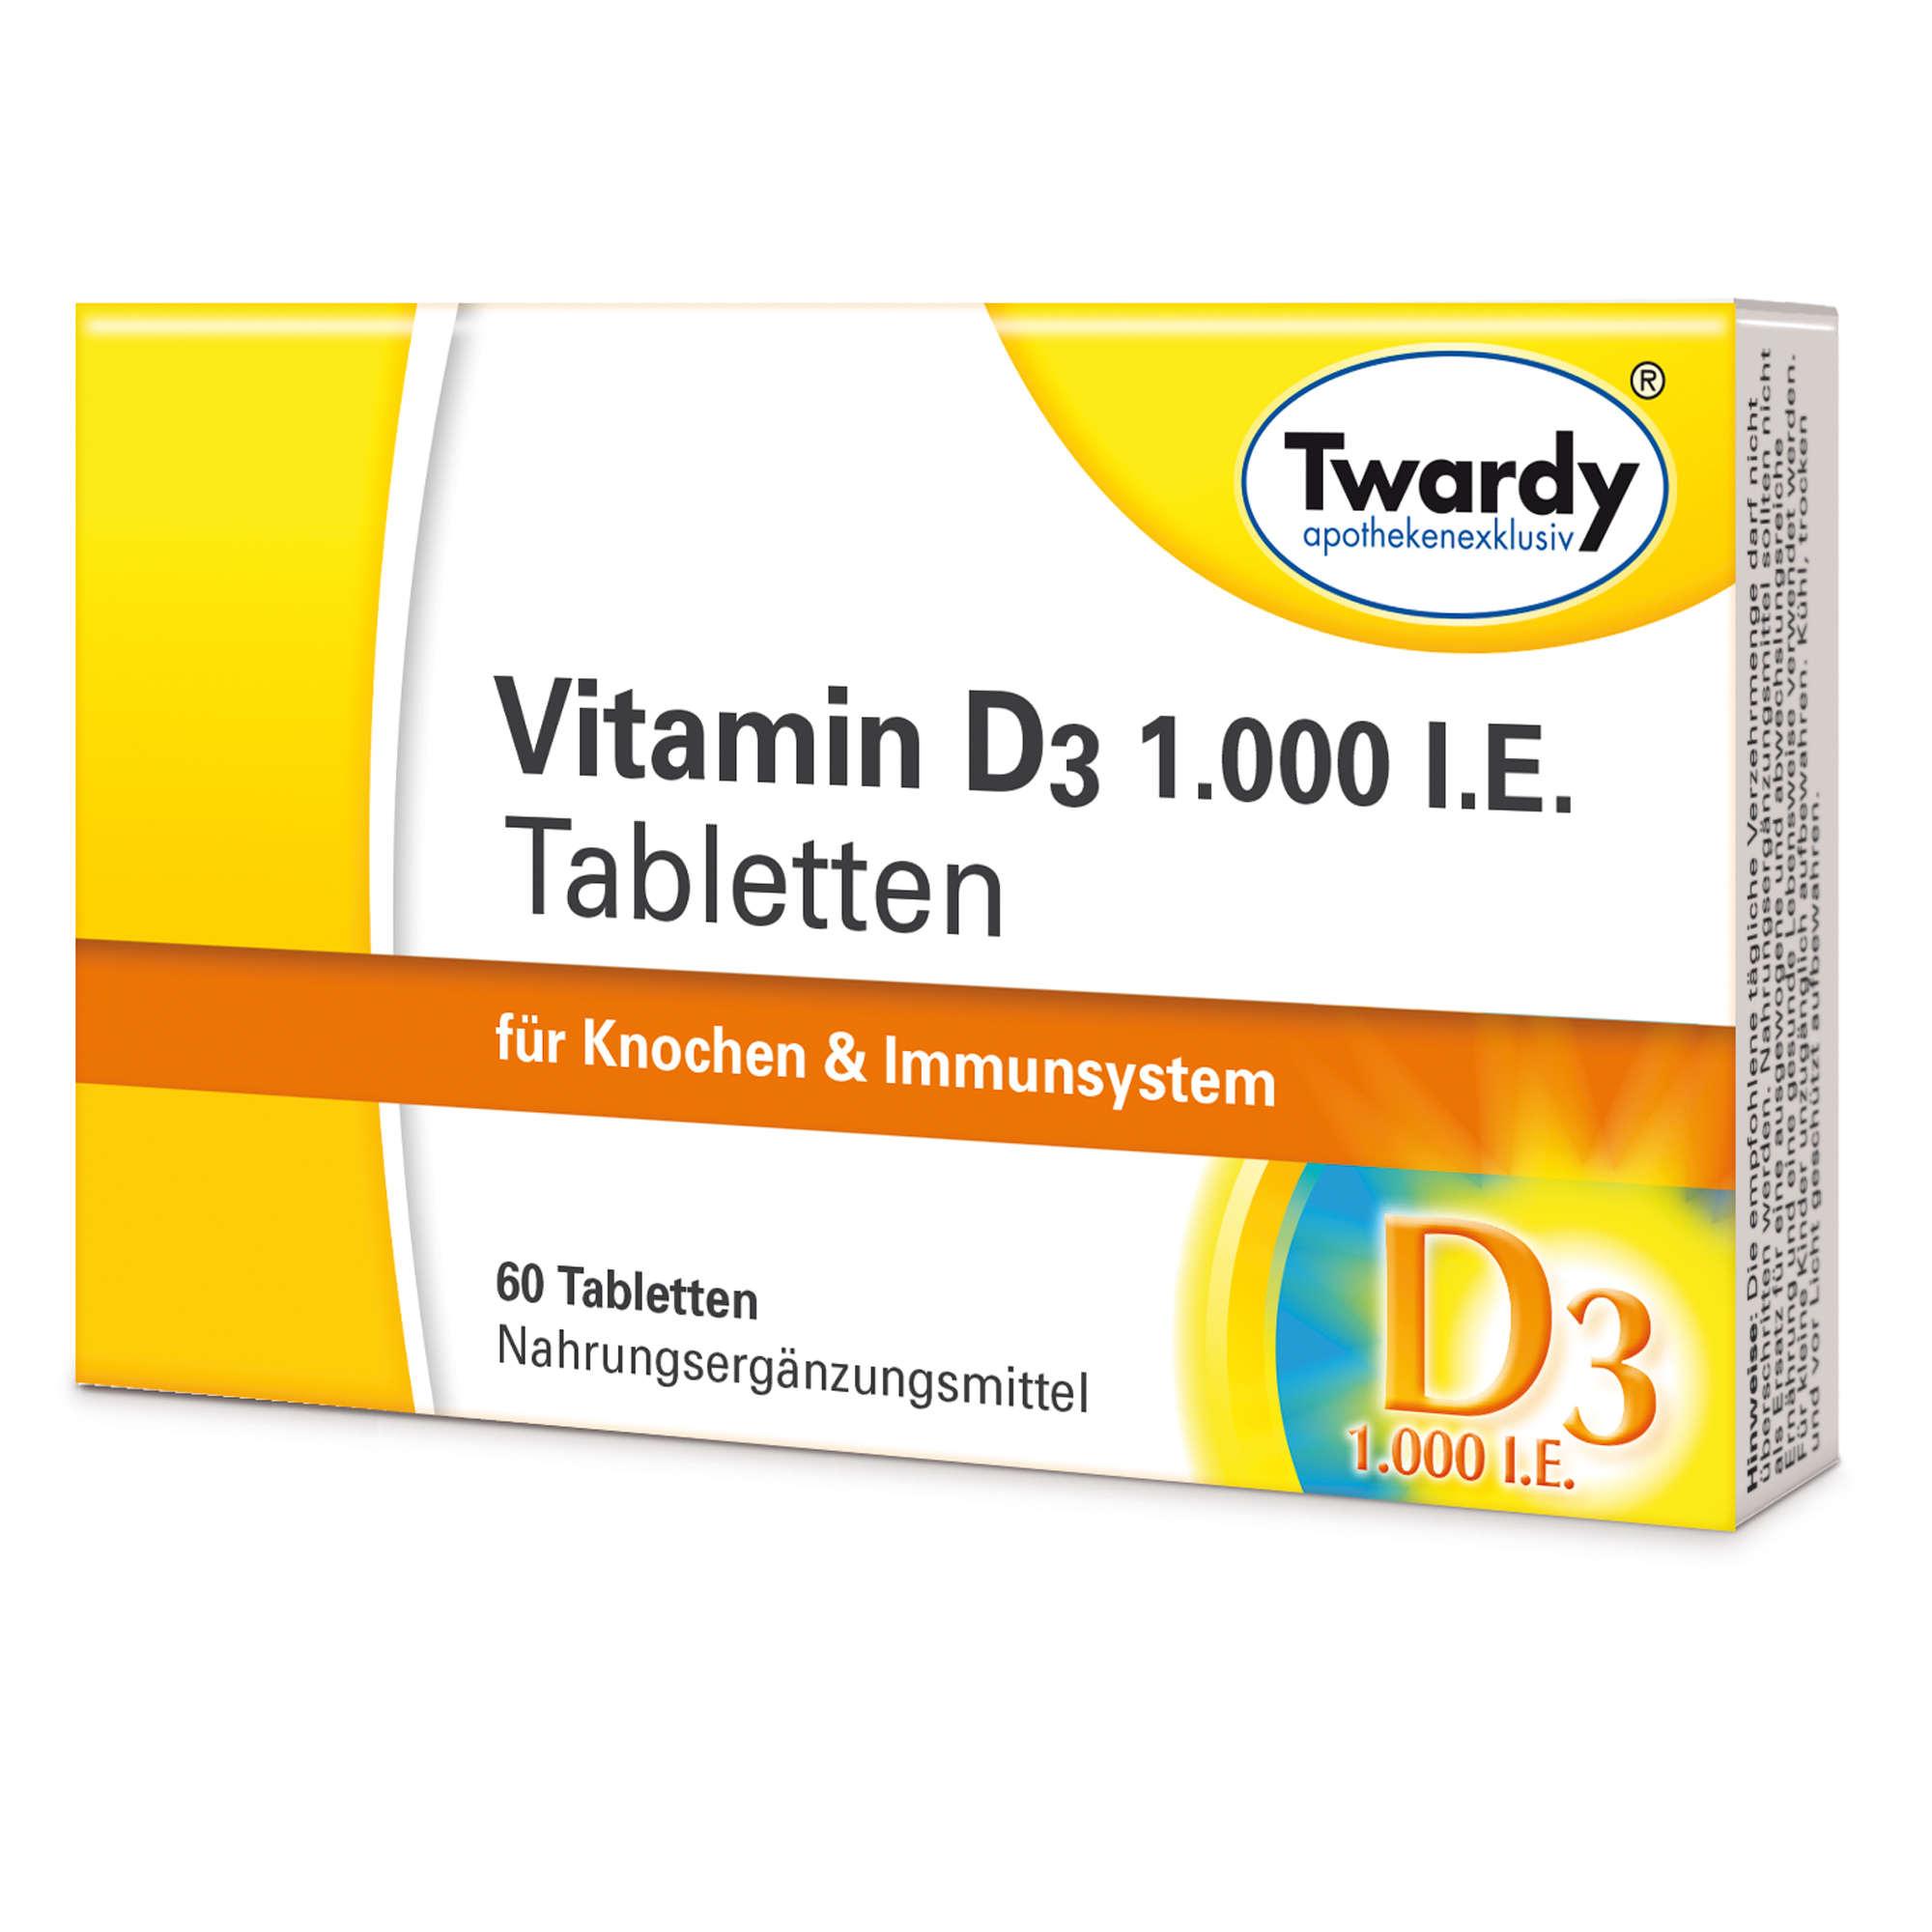 Vitamin D3 1.000 I.E. Tabletten – PZN 16623358